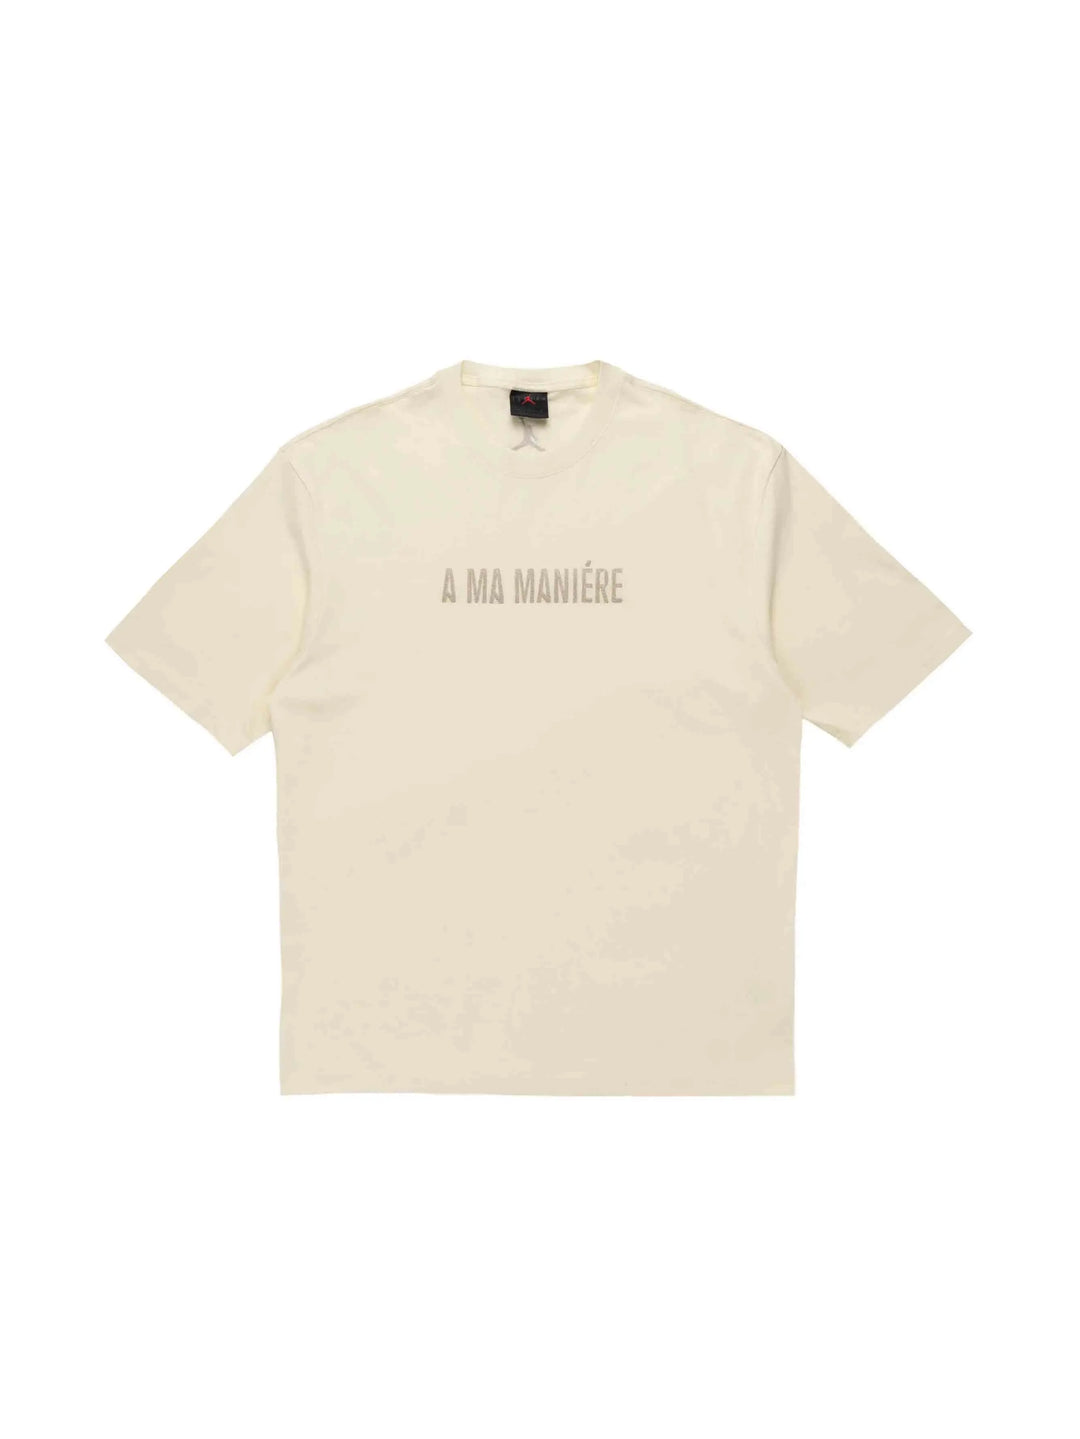 Jordan x A Ma Maniere S/S T-Shirt Coconut Milk Prior